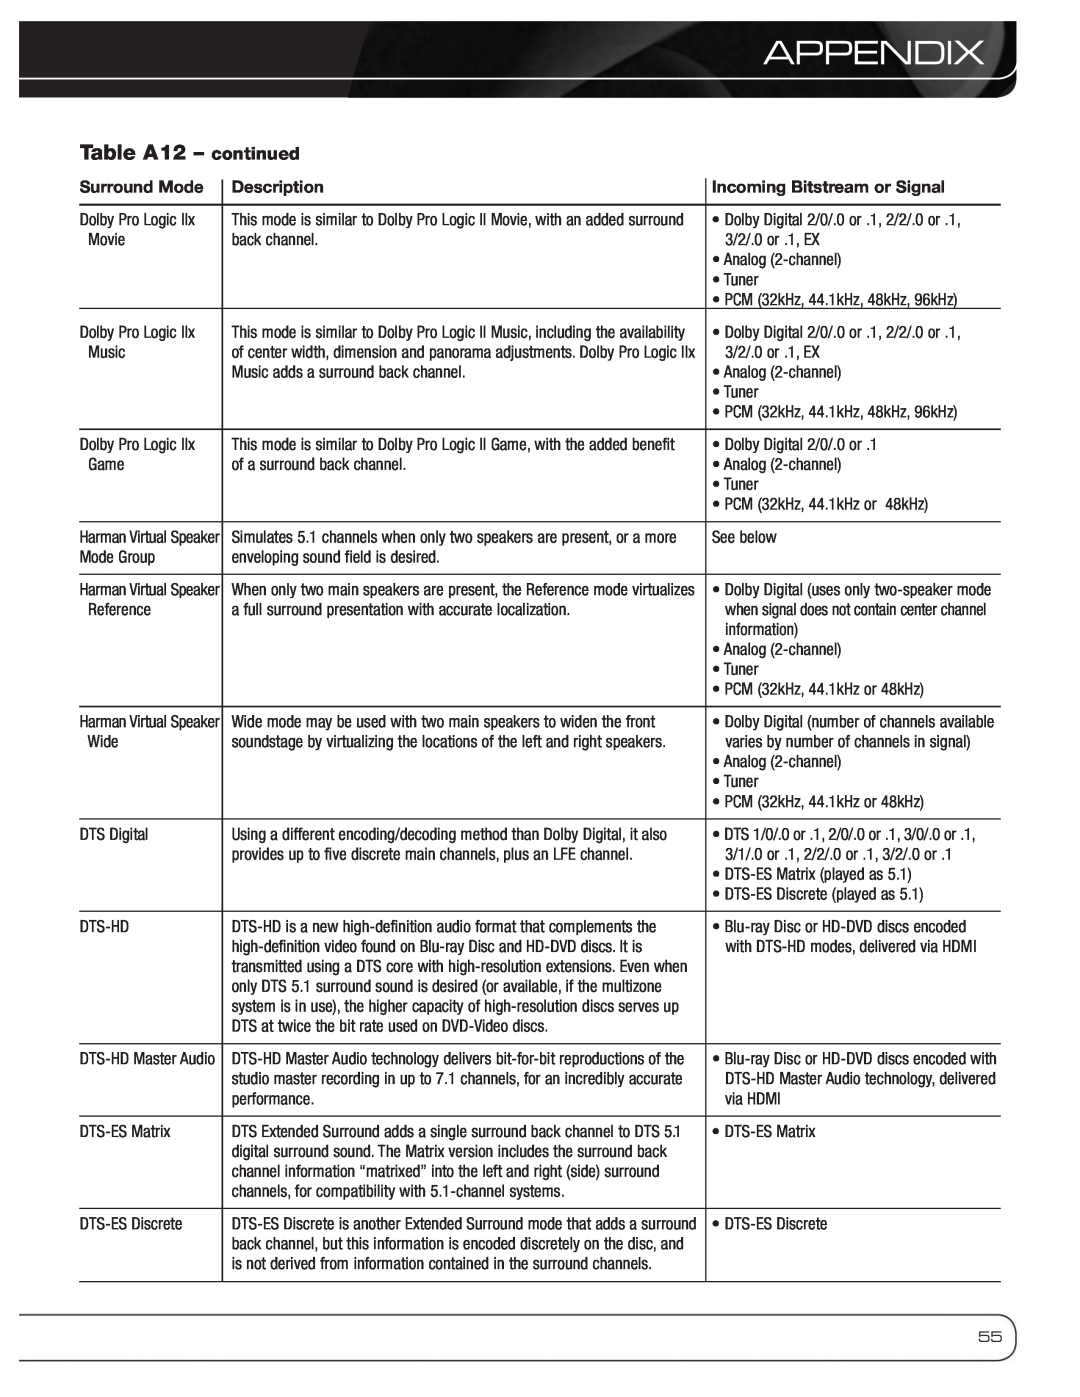 Harman-Kardon AVR 3600 owner manual Table A12 – continued, Appendix 